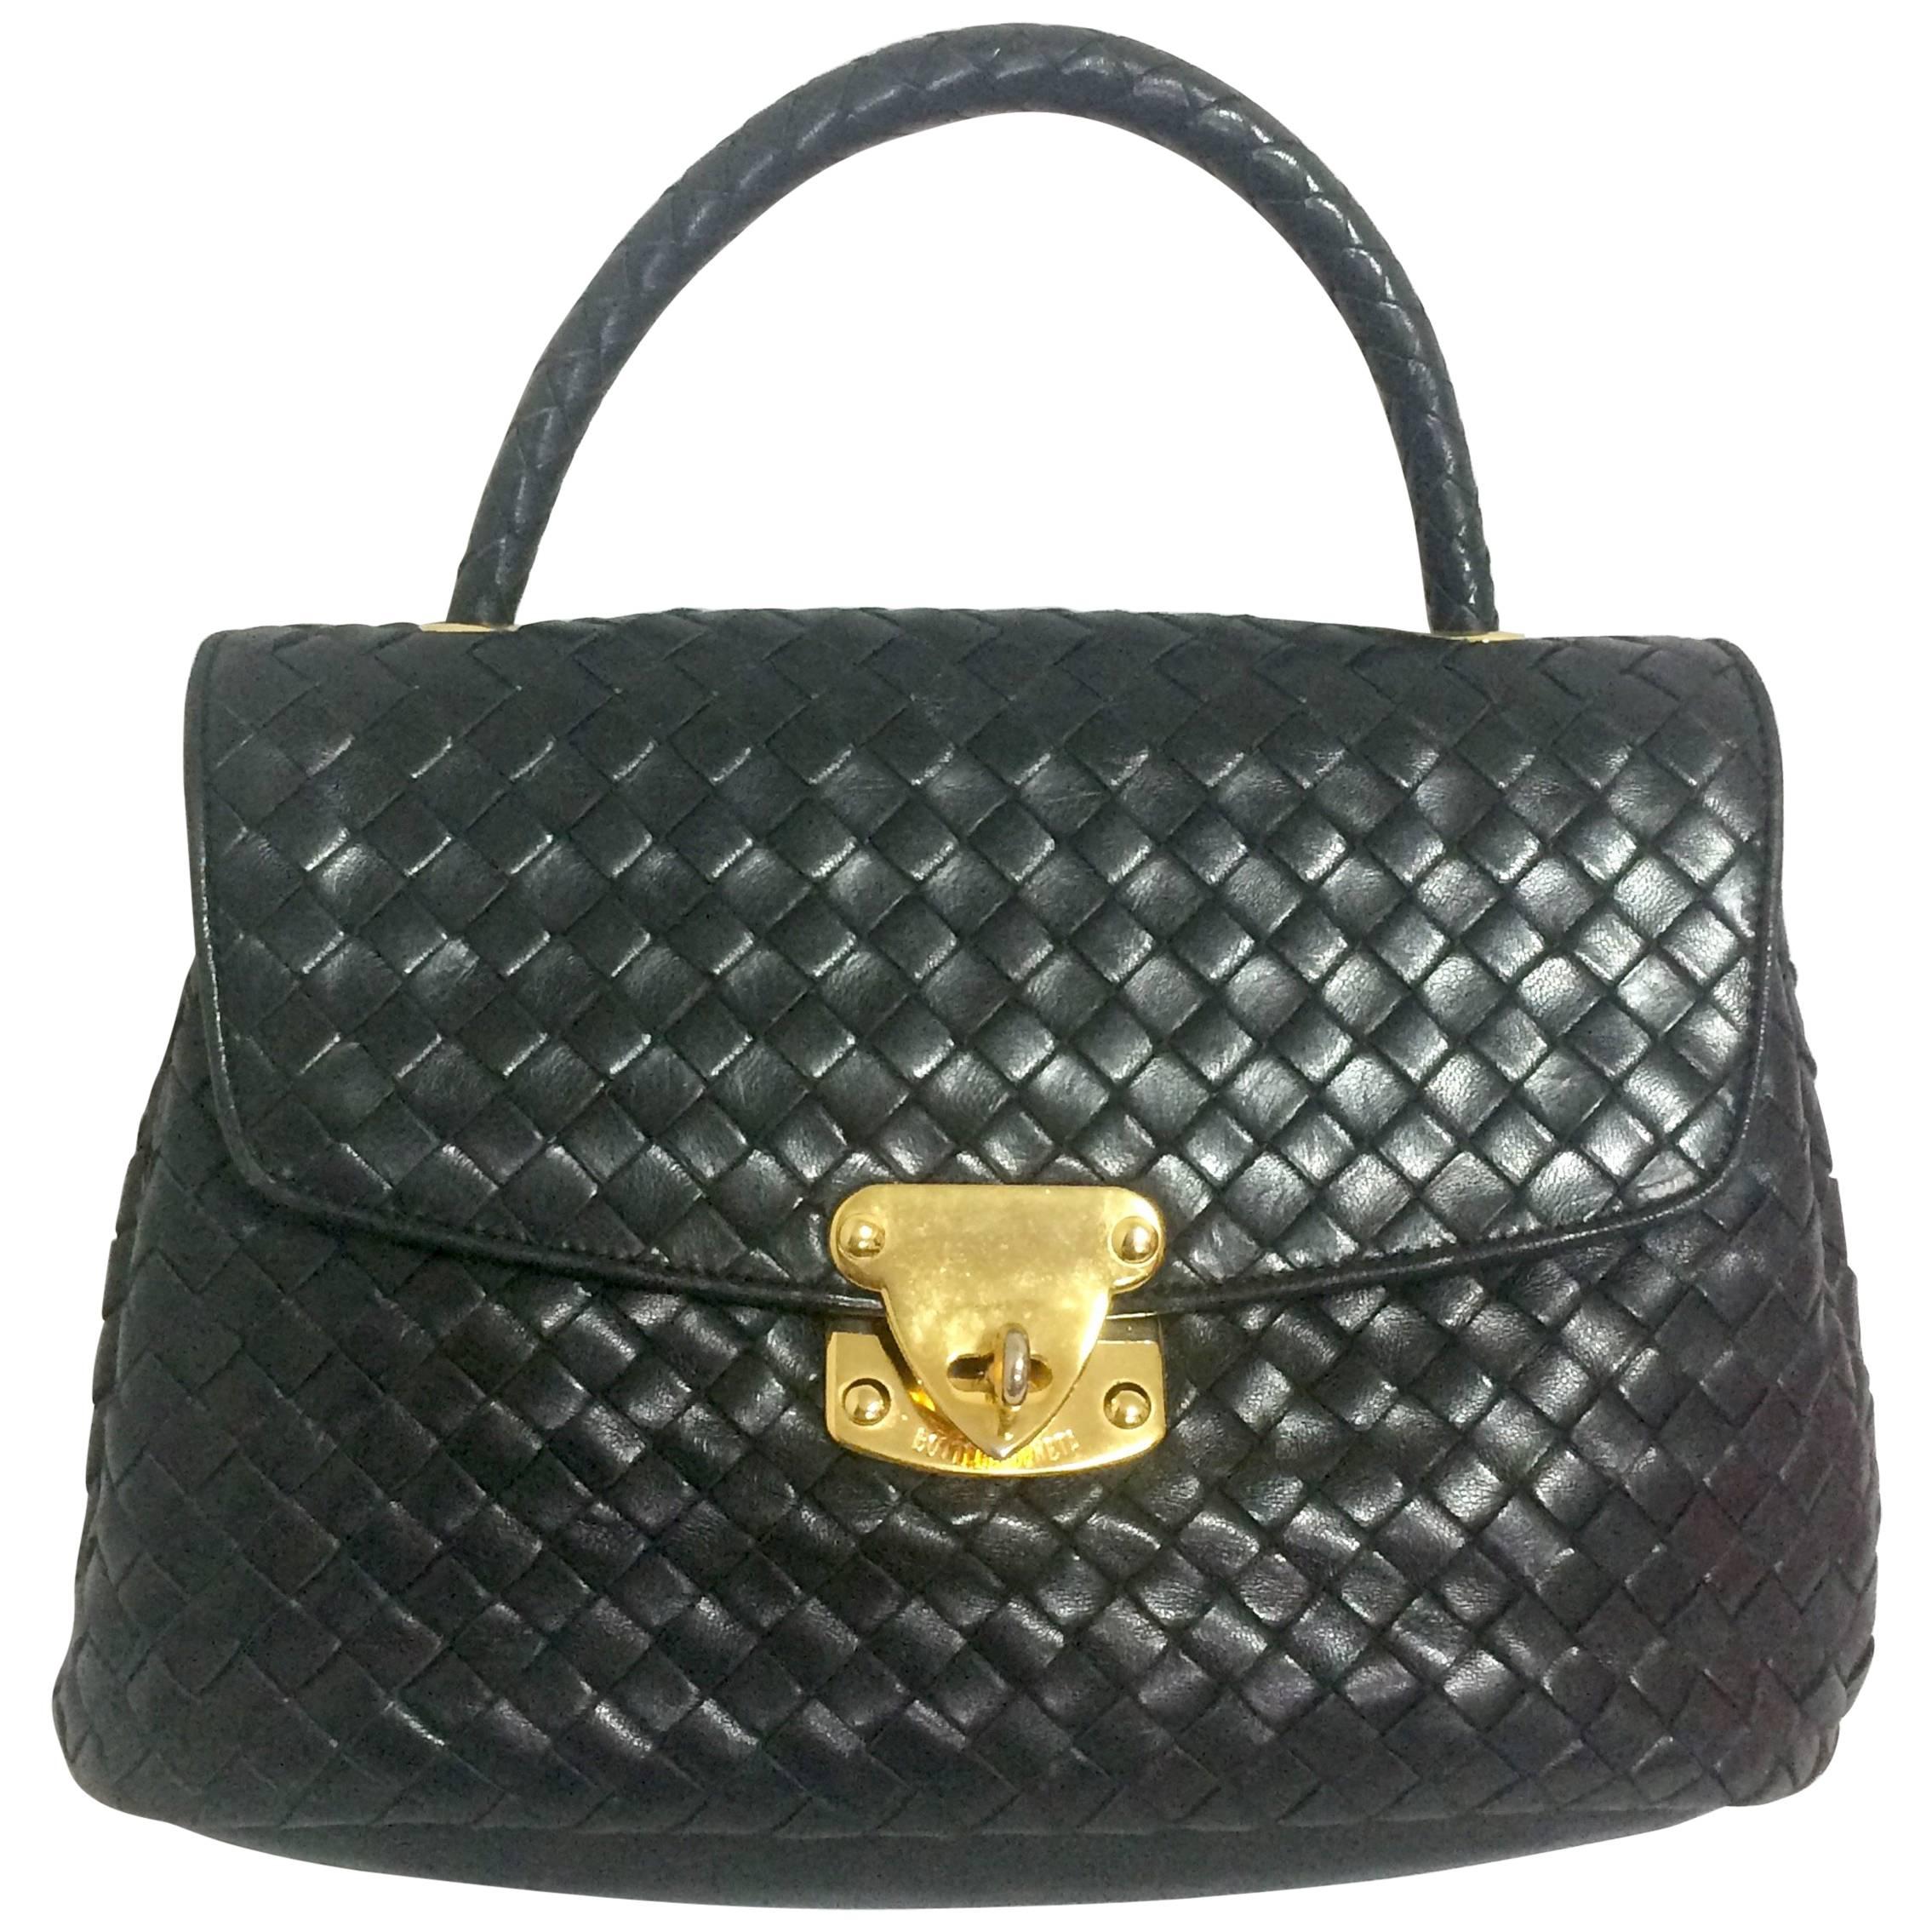 Vintage Bottega Veneta classic black lamb leather intrecciato handbag. 